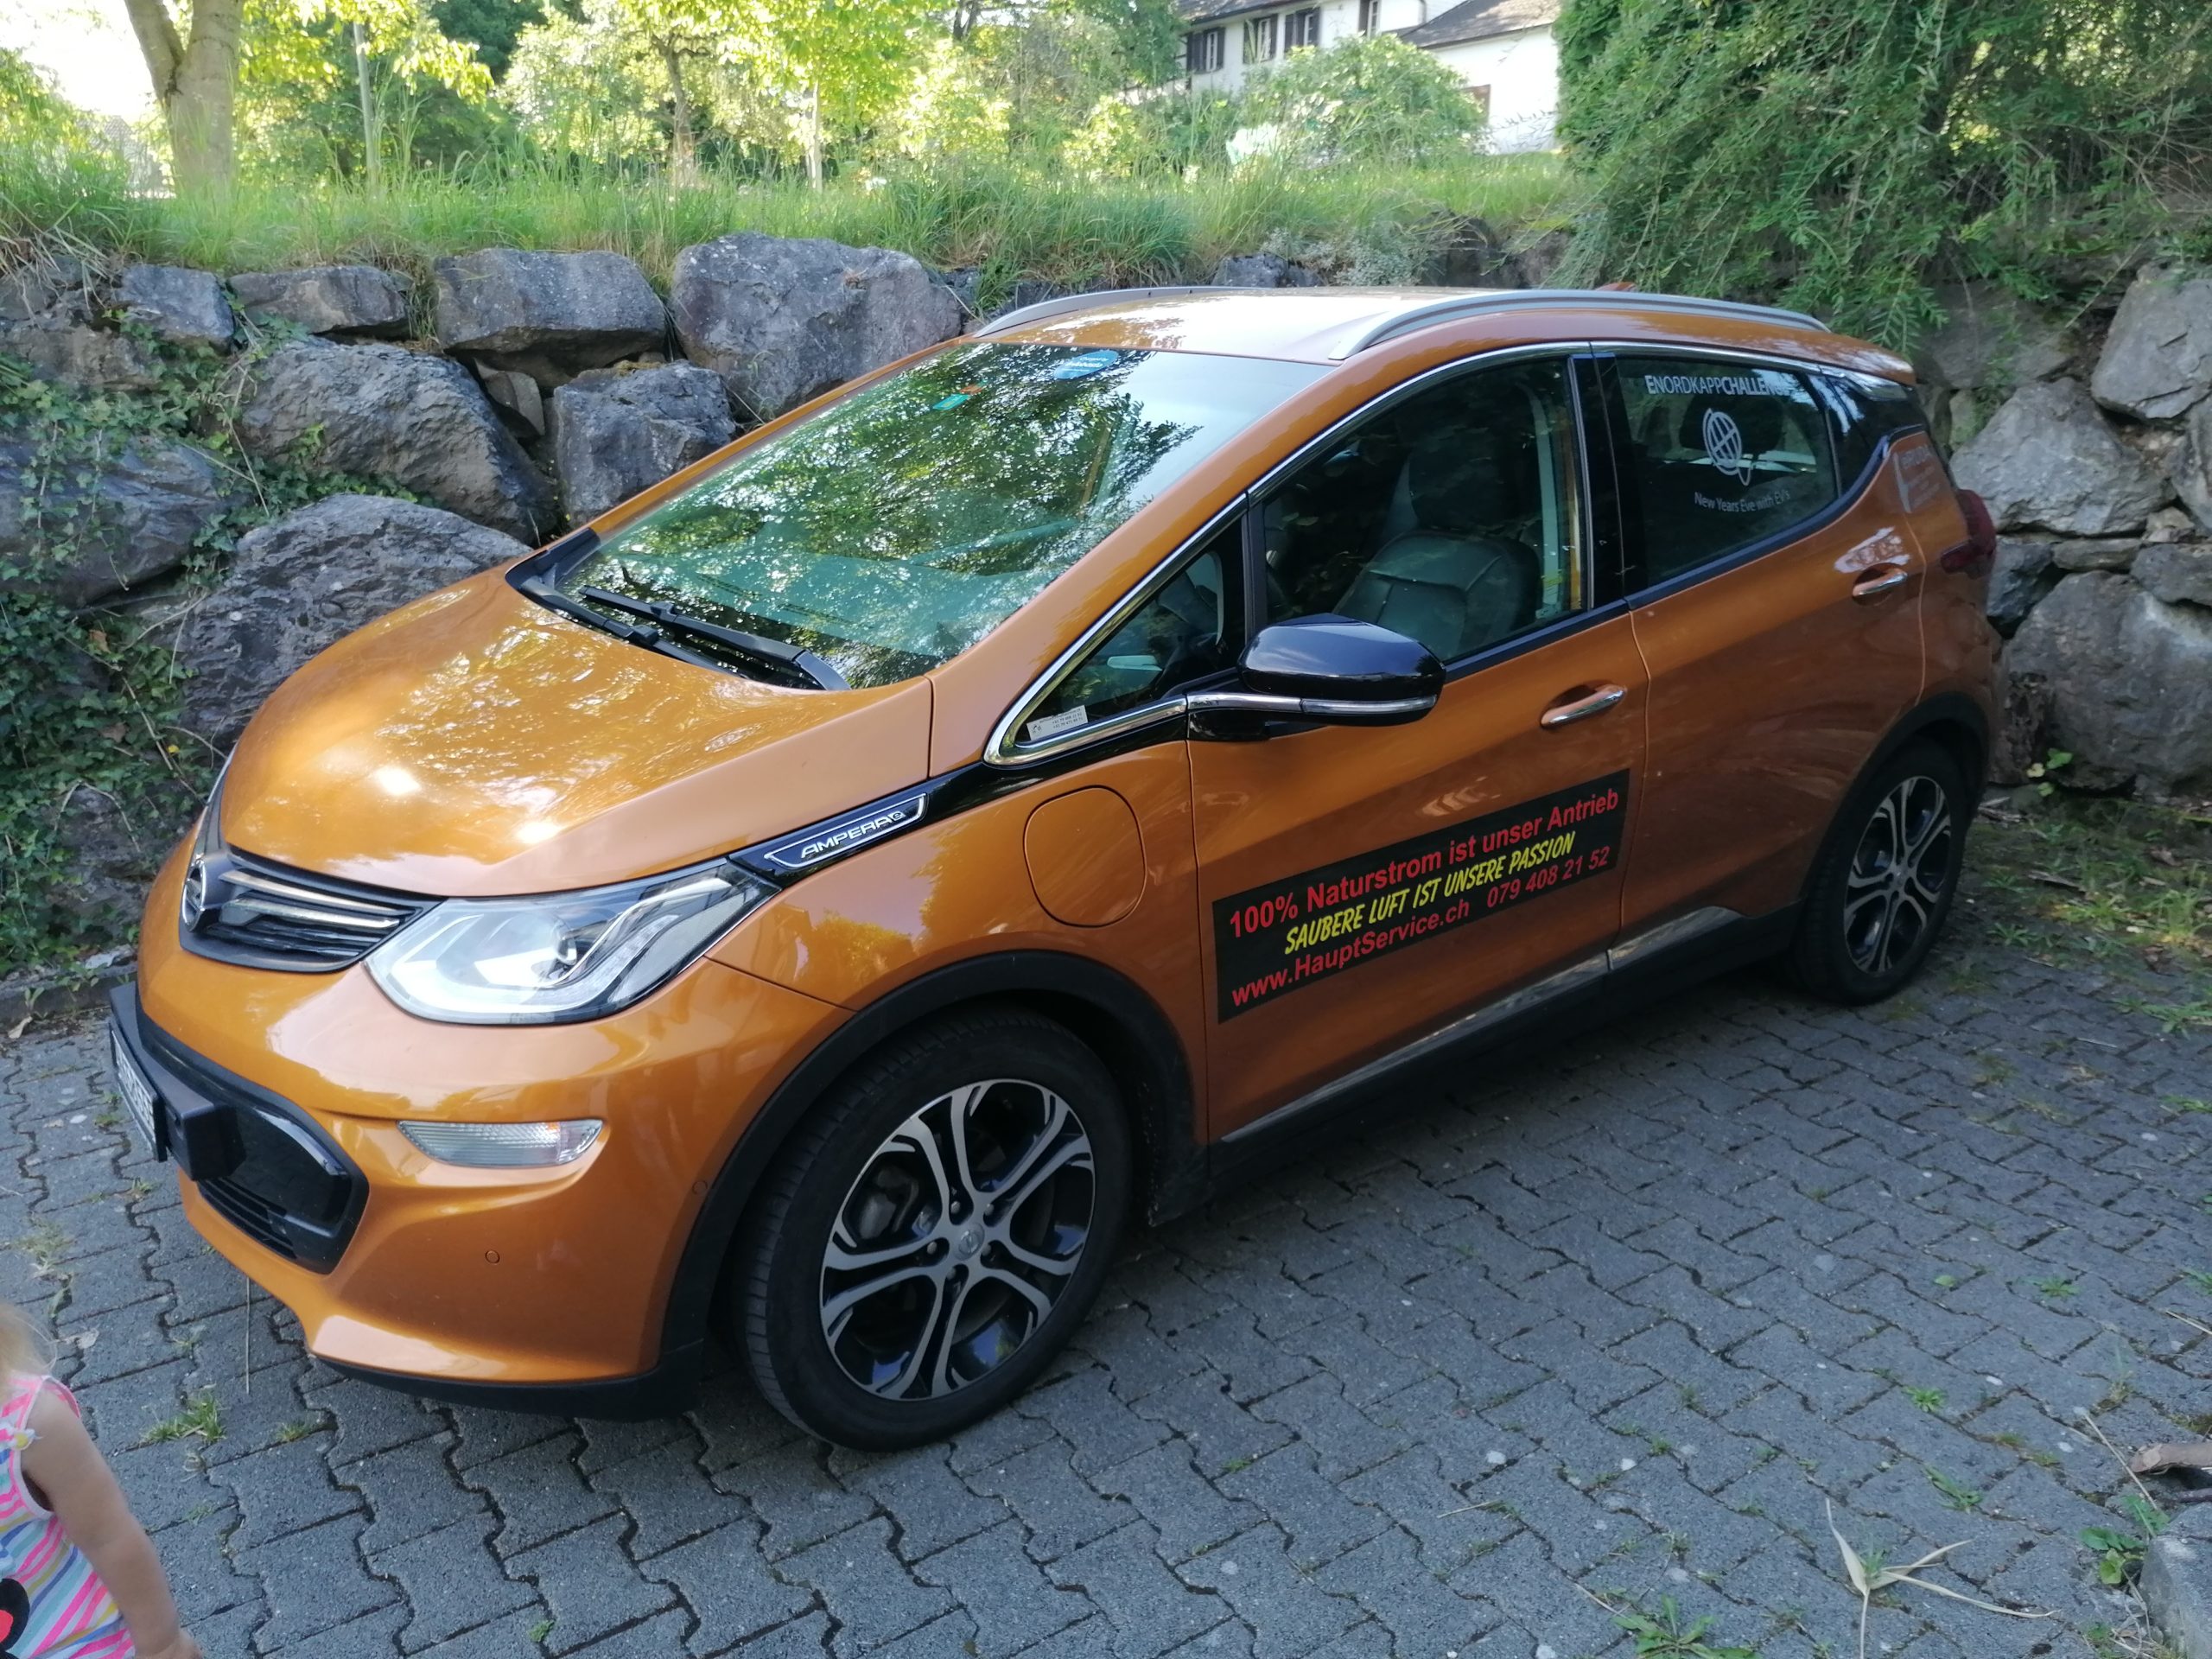 Opel Ampera-e – eNordkappChallenge